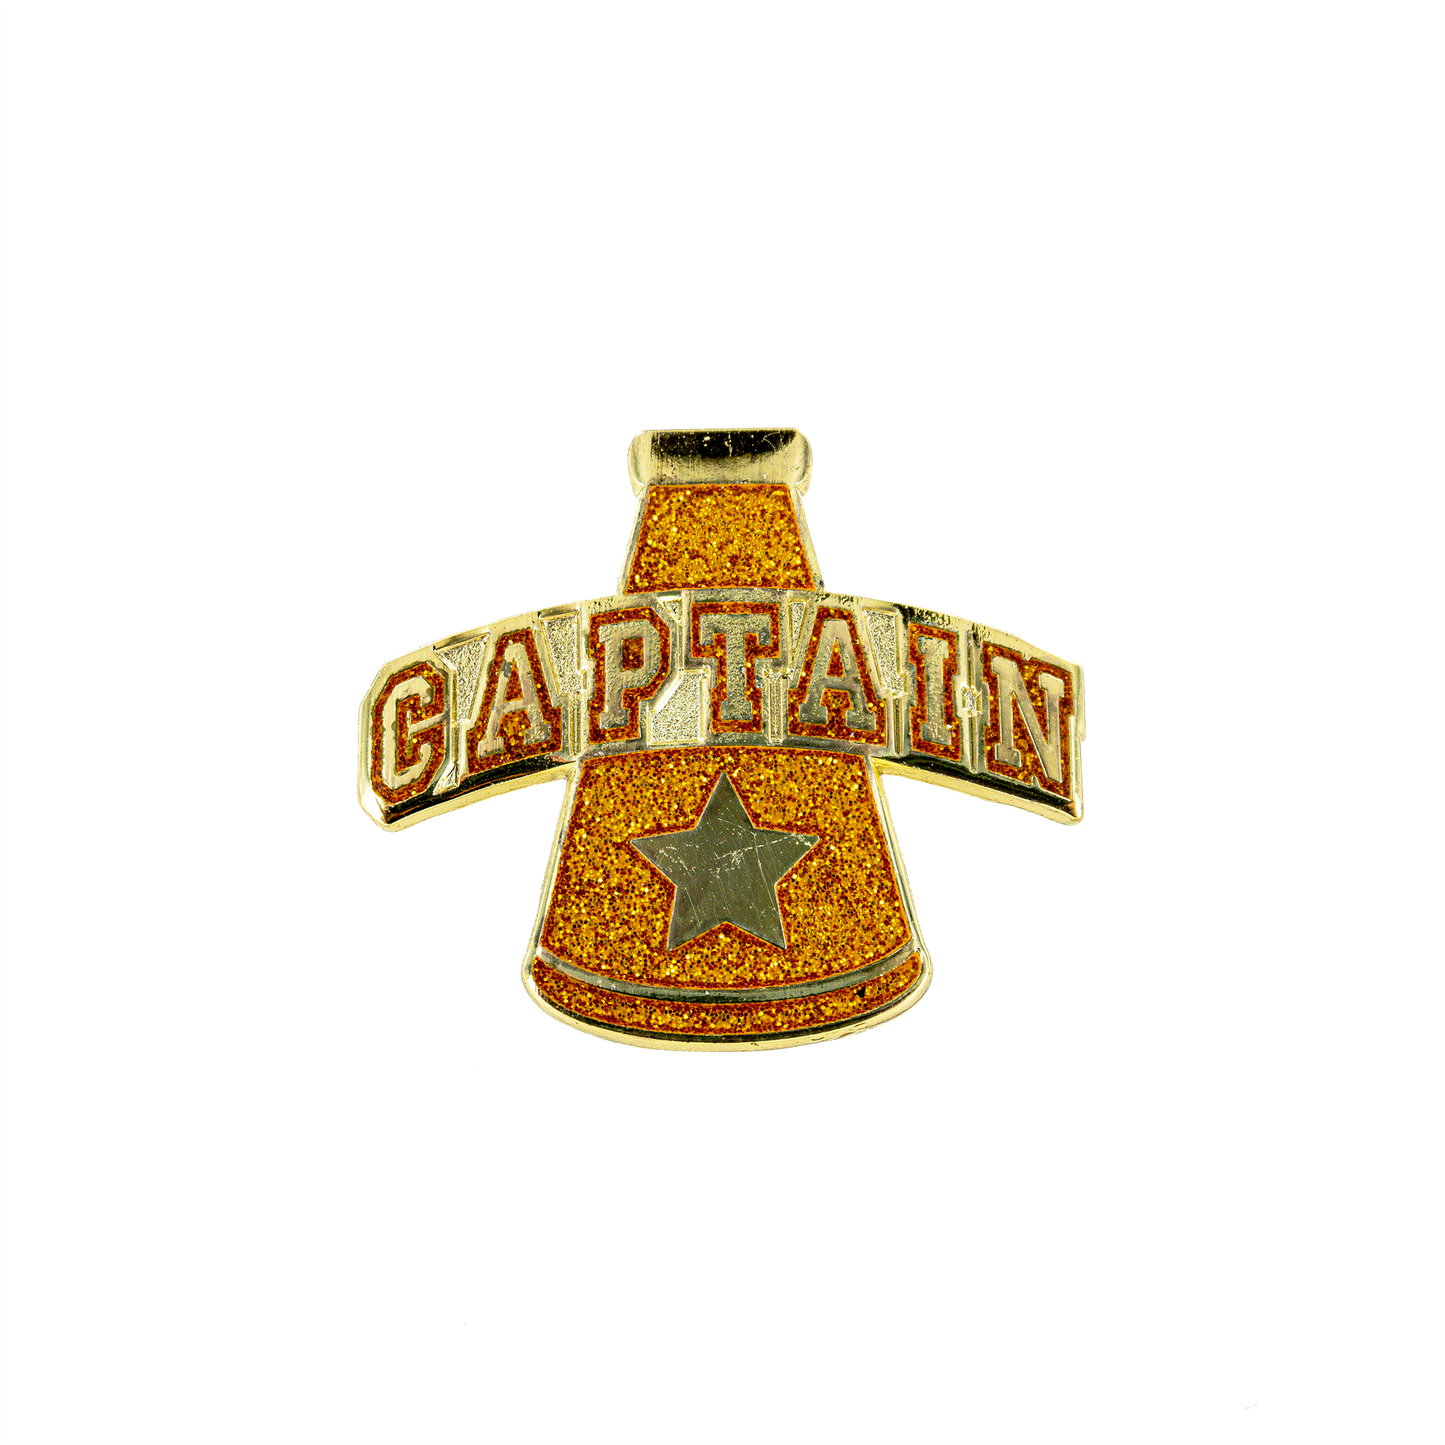 Captain Pin